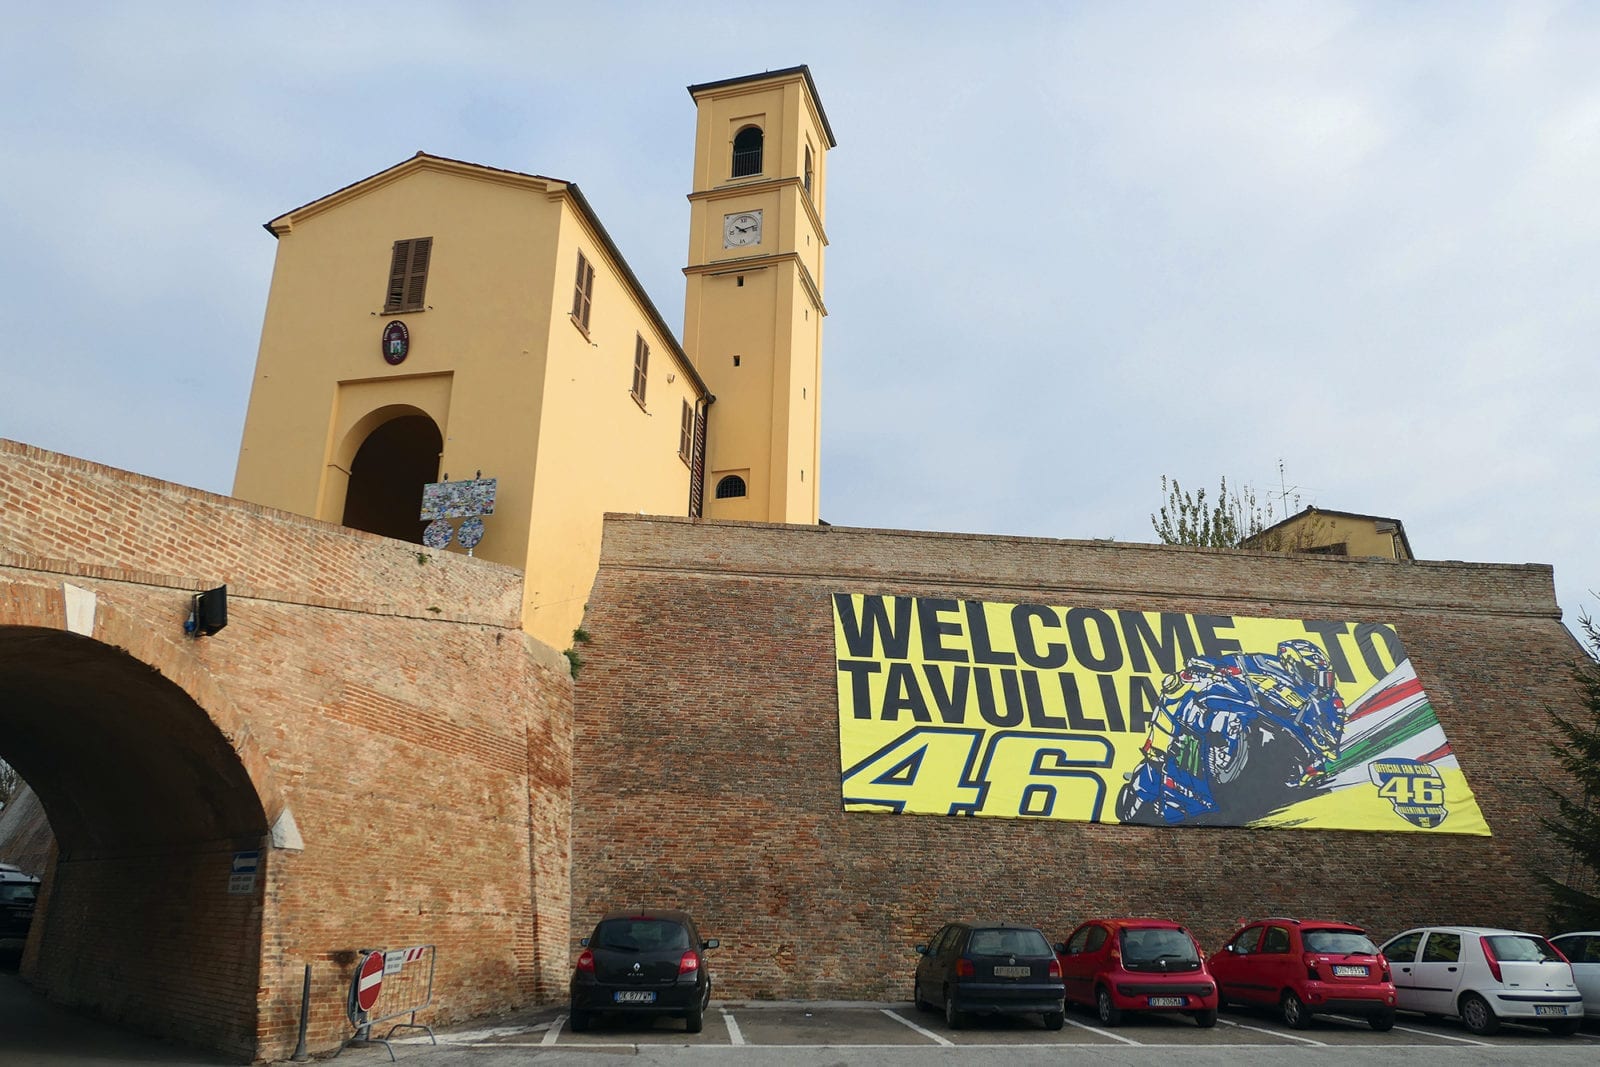 VR46 banner in Tavullia